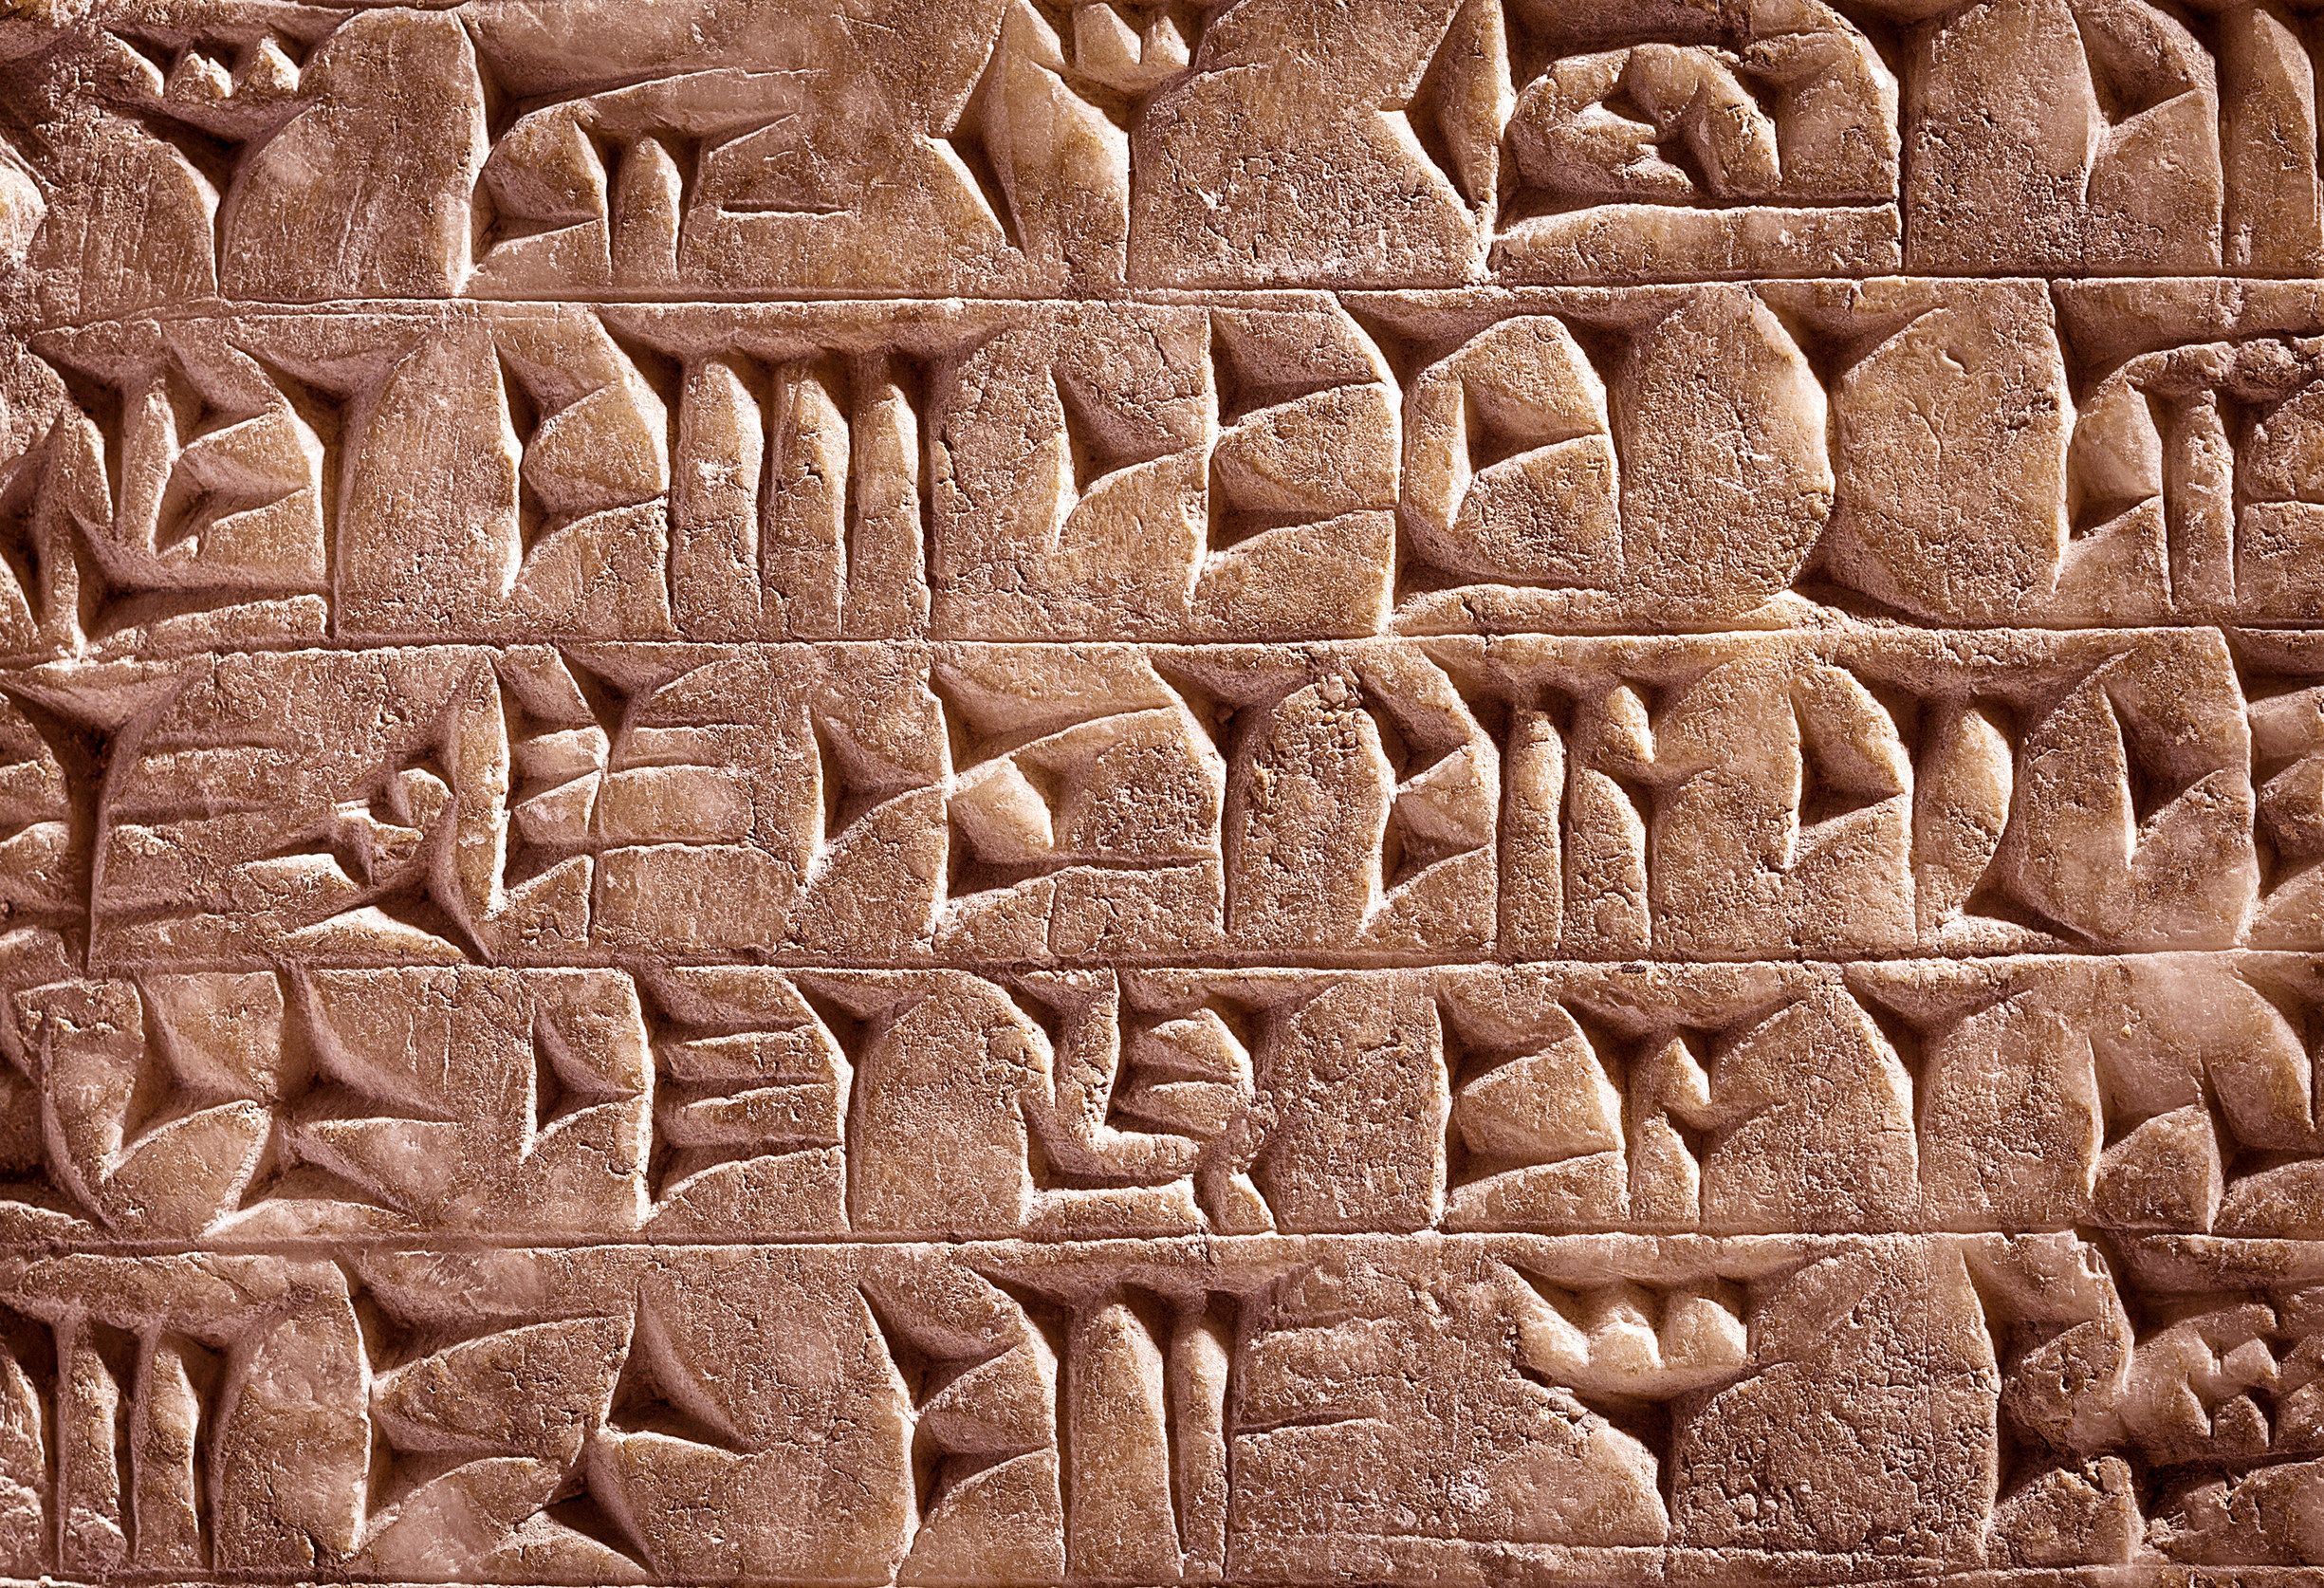 Mesopotamia writing carved in stone